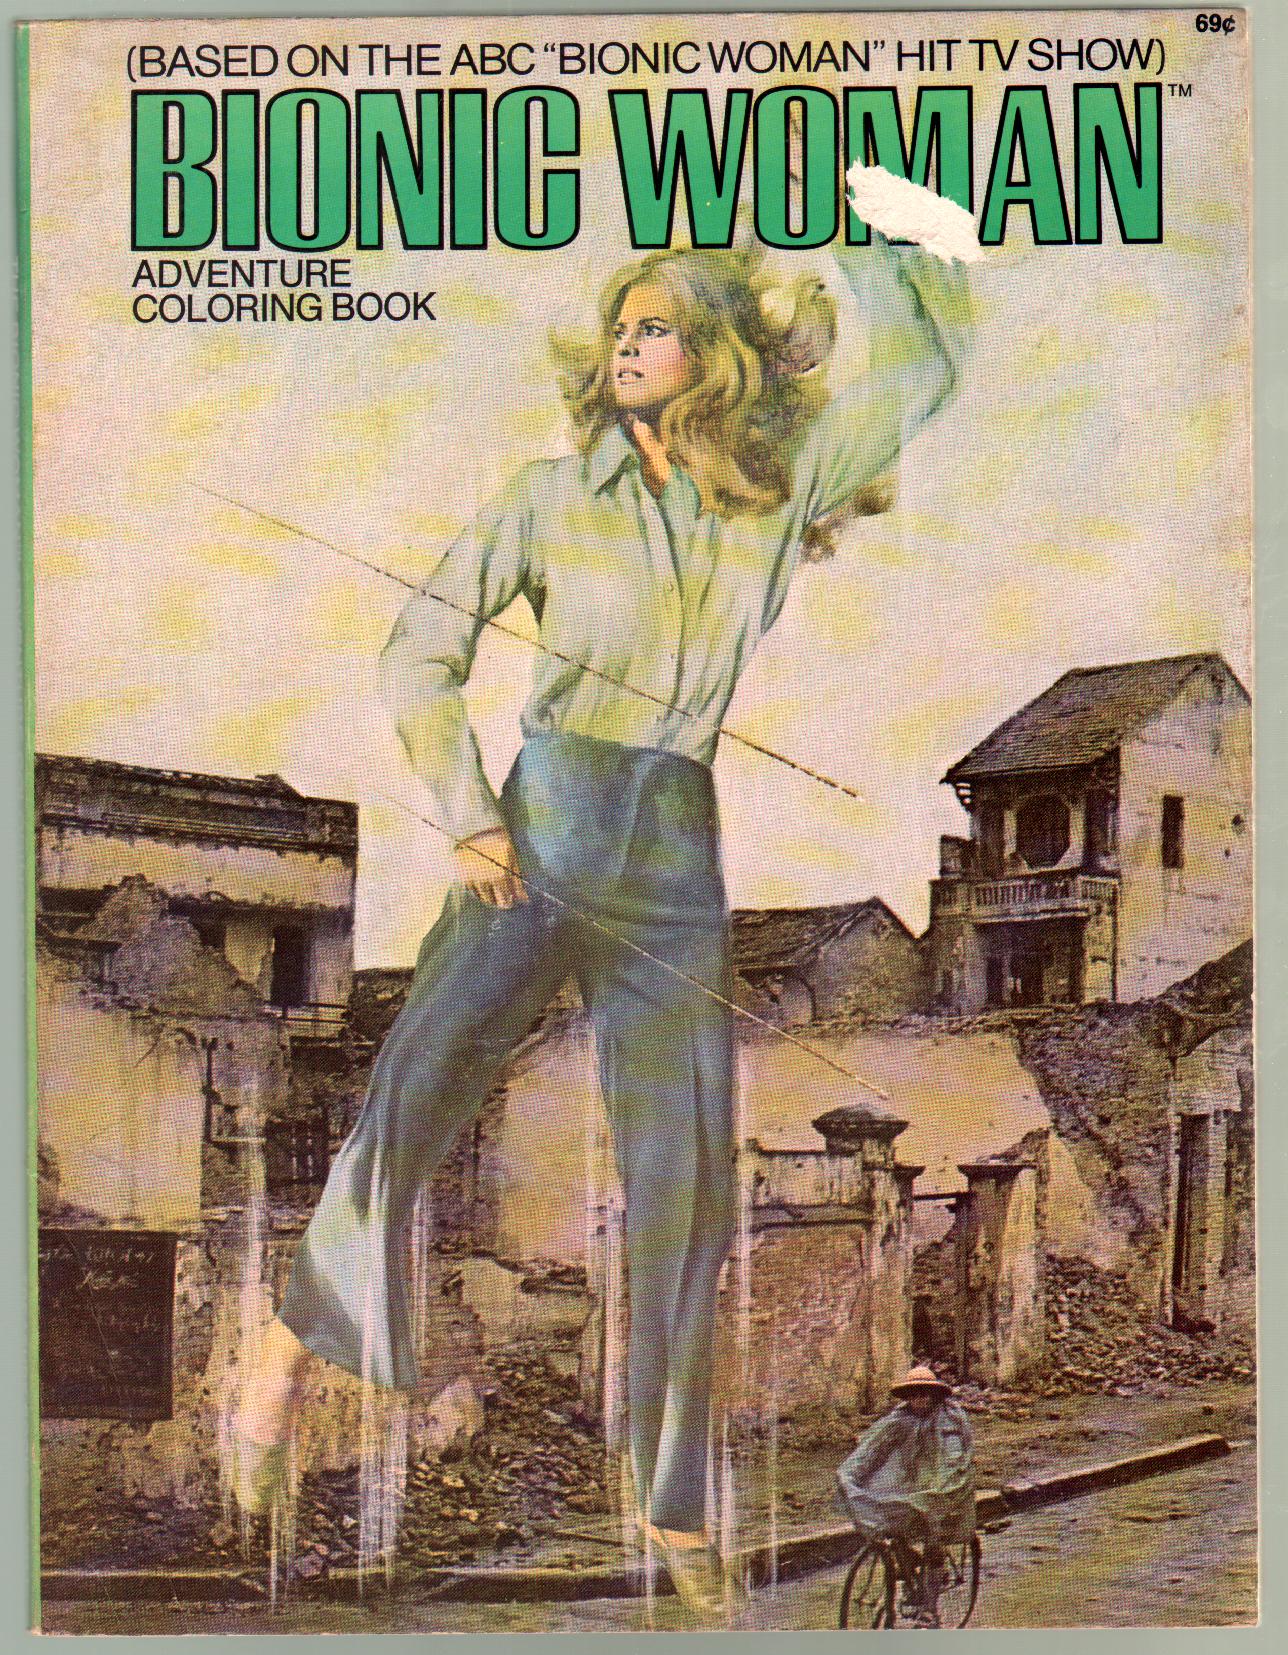 Bionic Woman Adventure Coloring Book #15011 1976-Lindsay Wagner-TV  series-VG: (1976) Comic